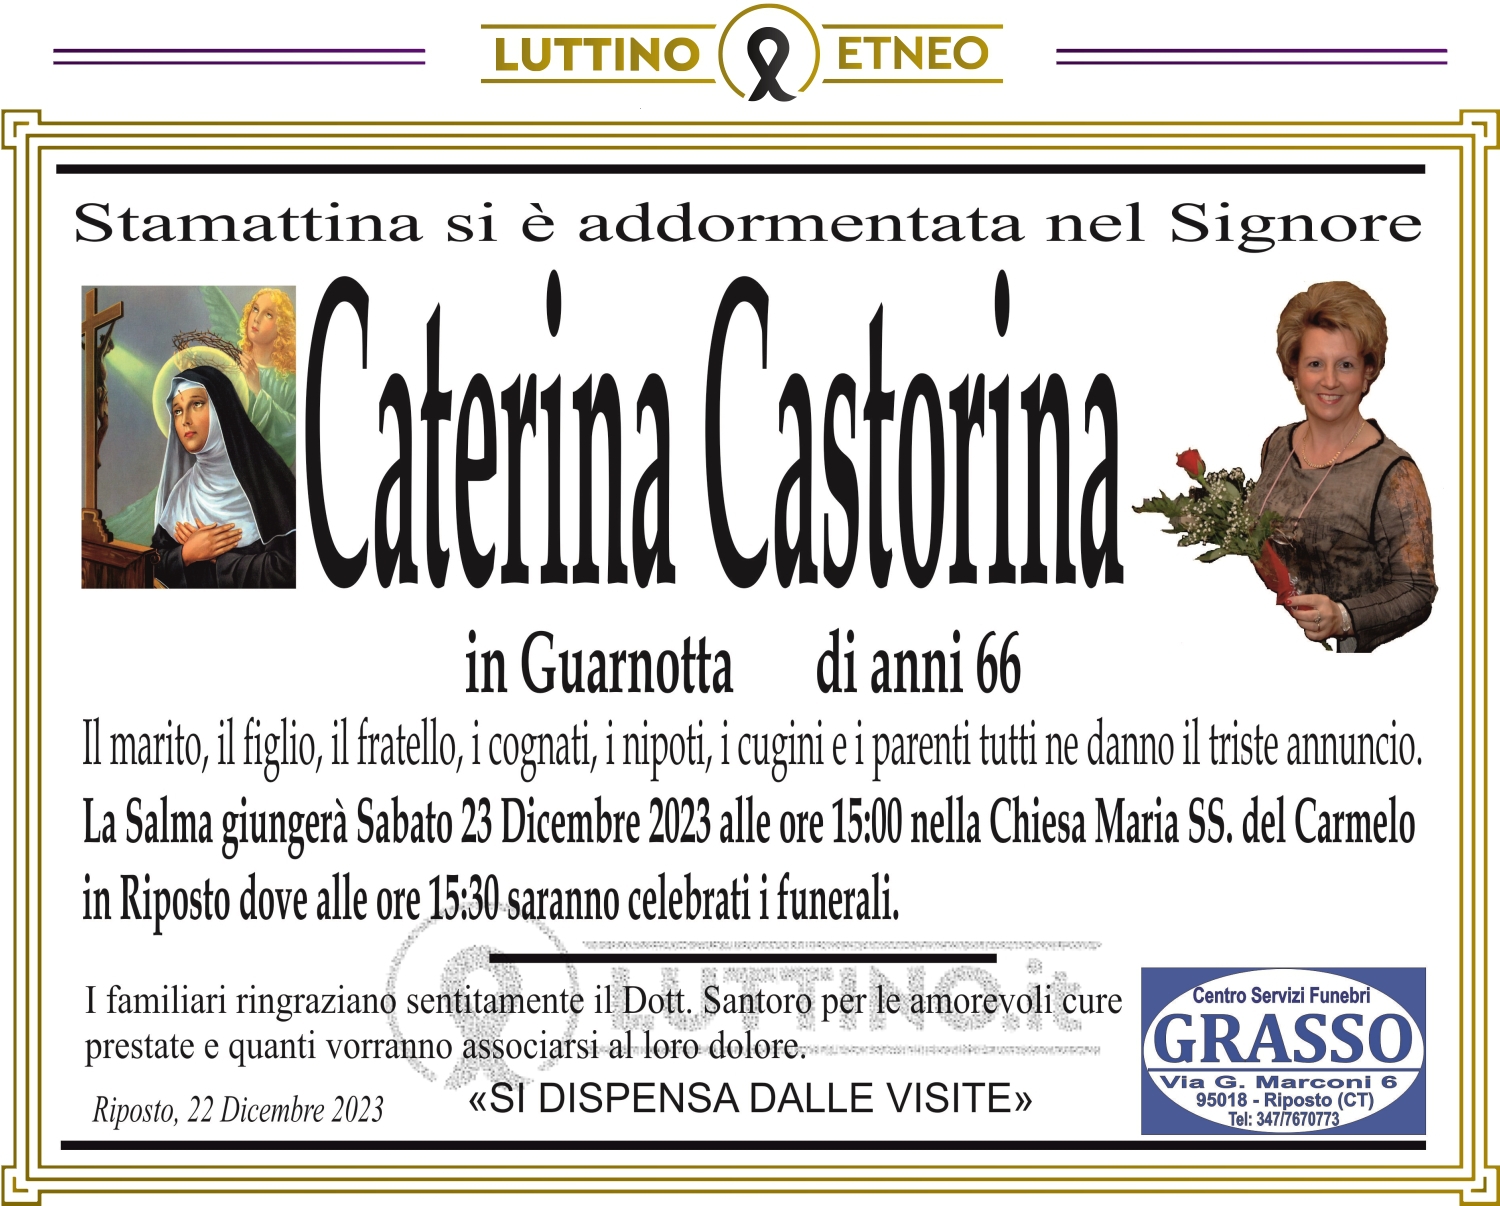 Caterina Castorina